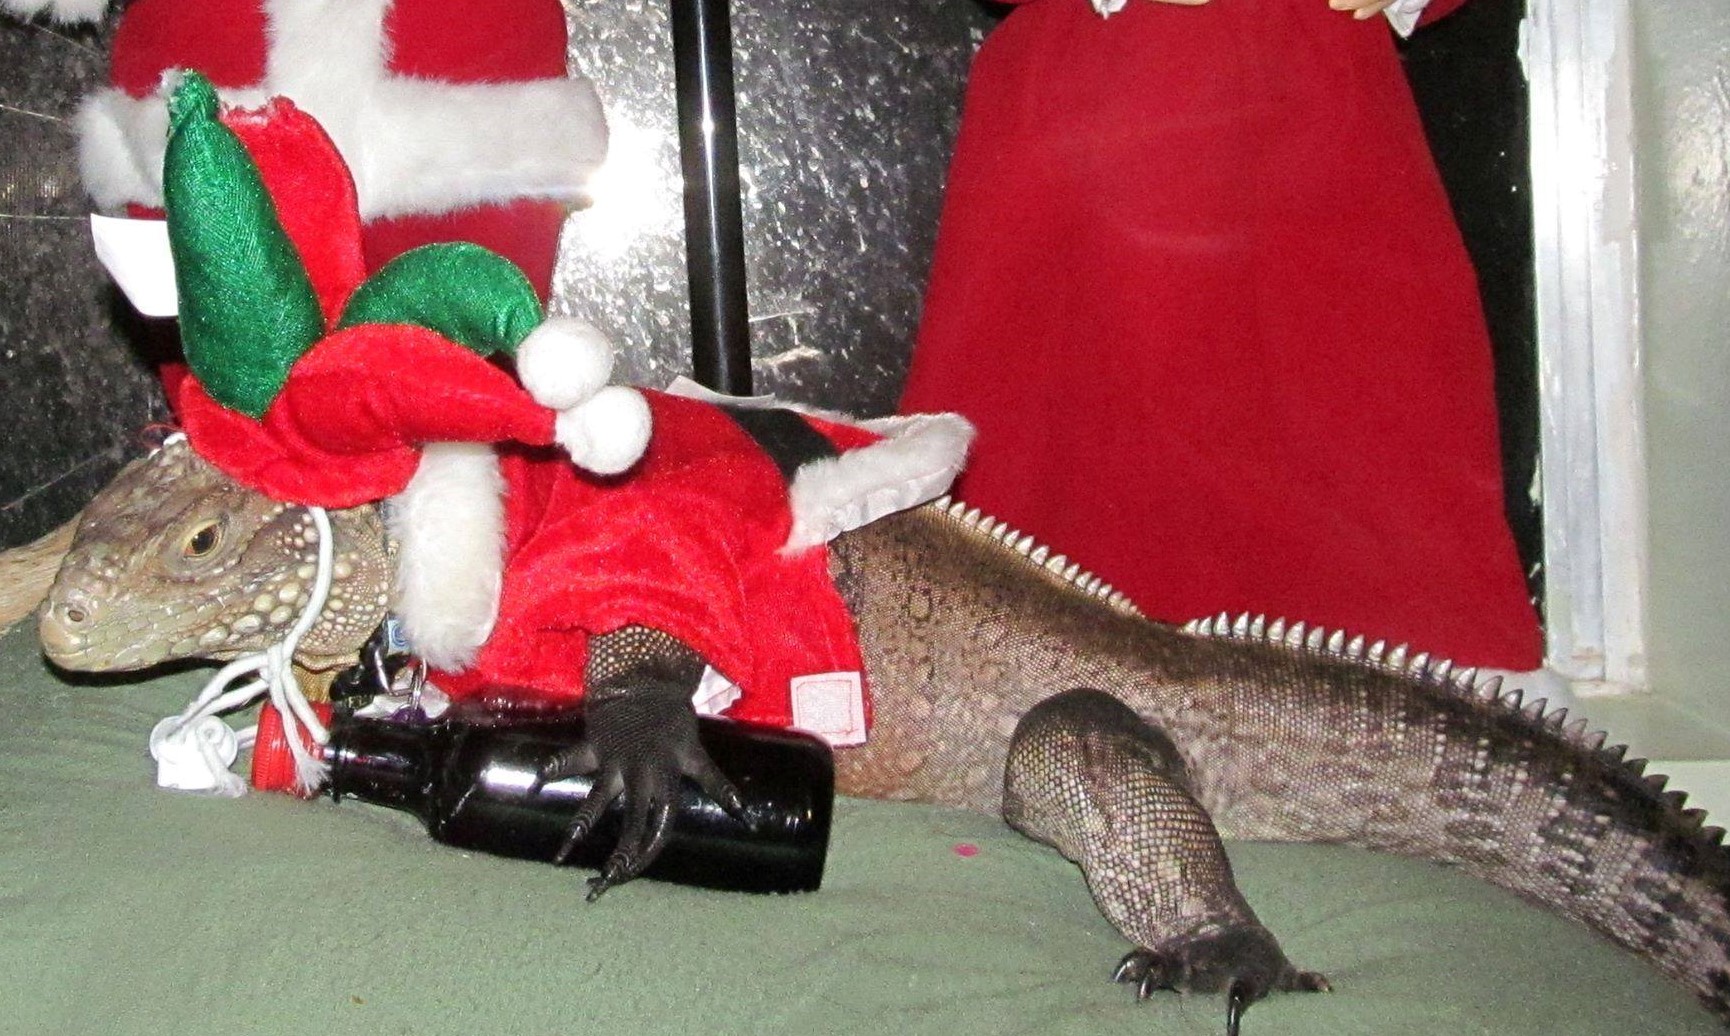 kismet iguana in elf outfit